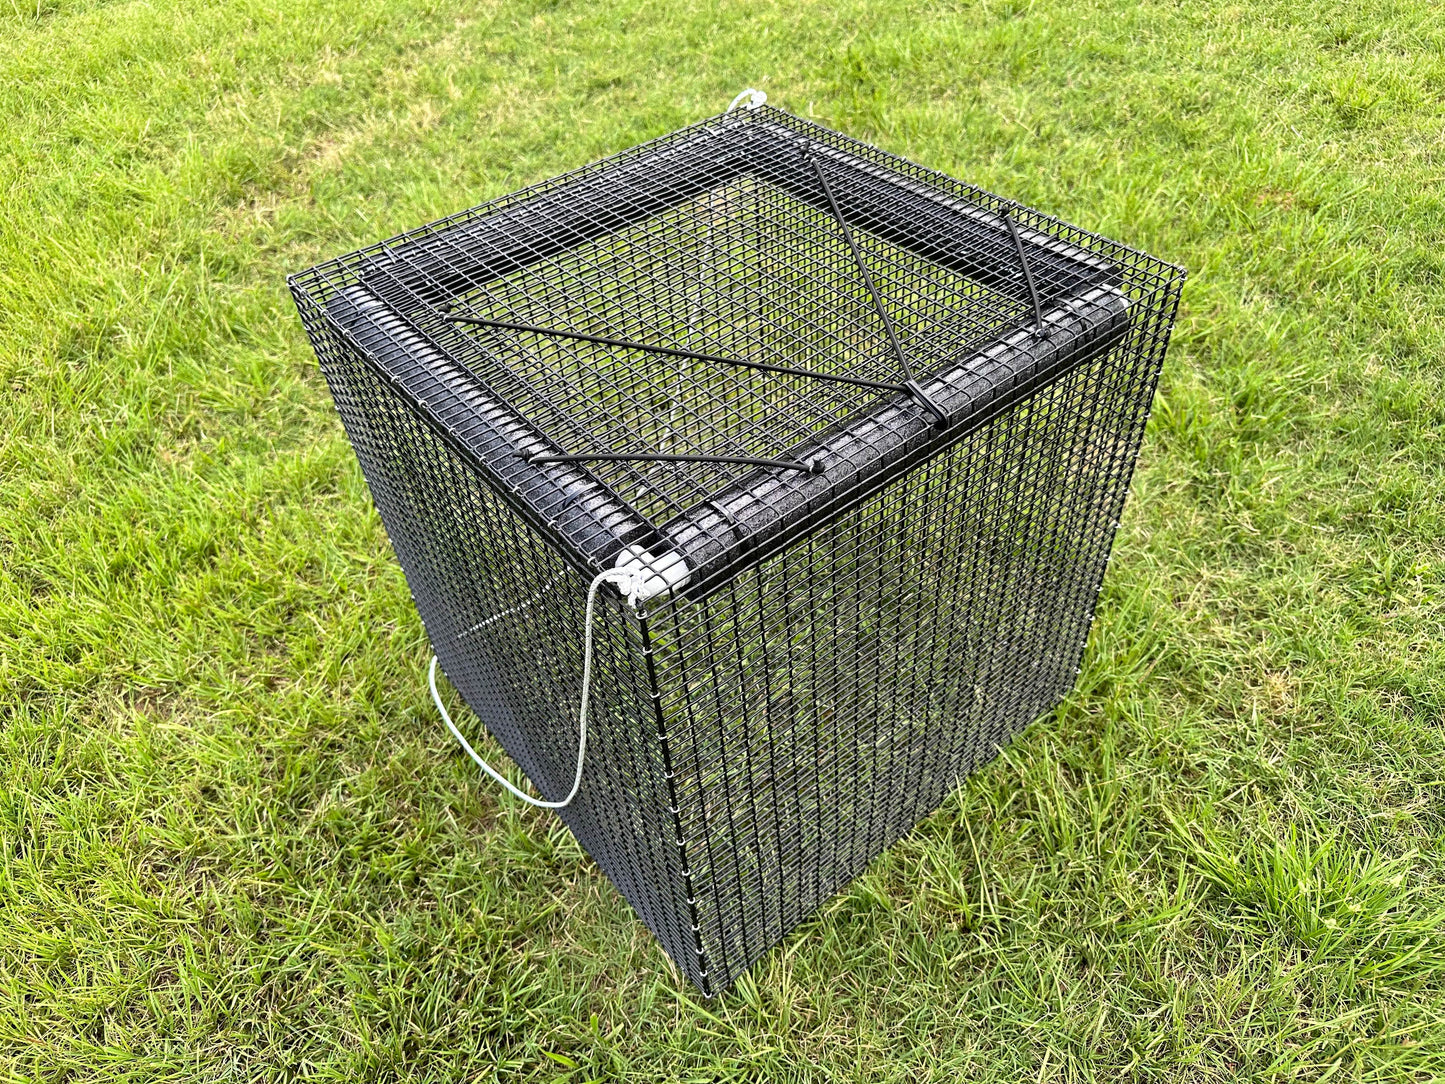 Live Fish Basket - Fish Cage - Fish Holding Pen (2x2x2 ft cube)